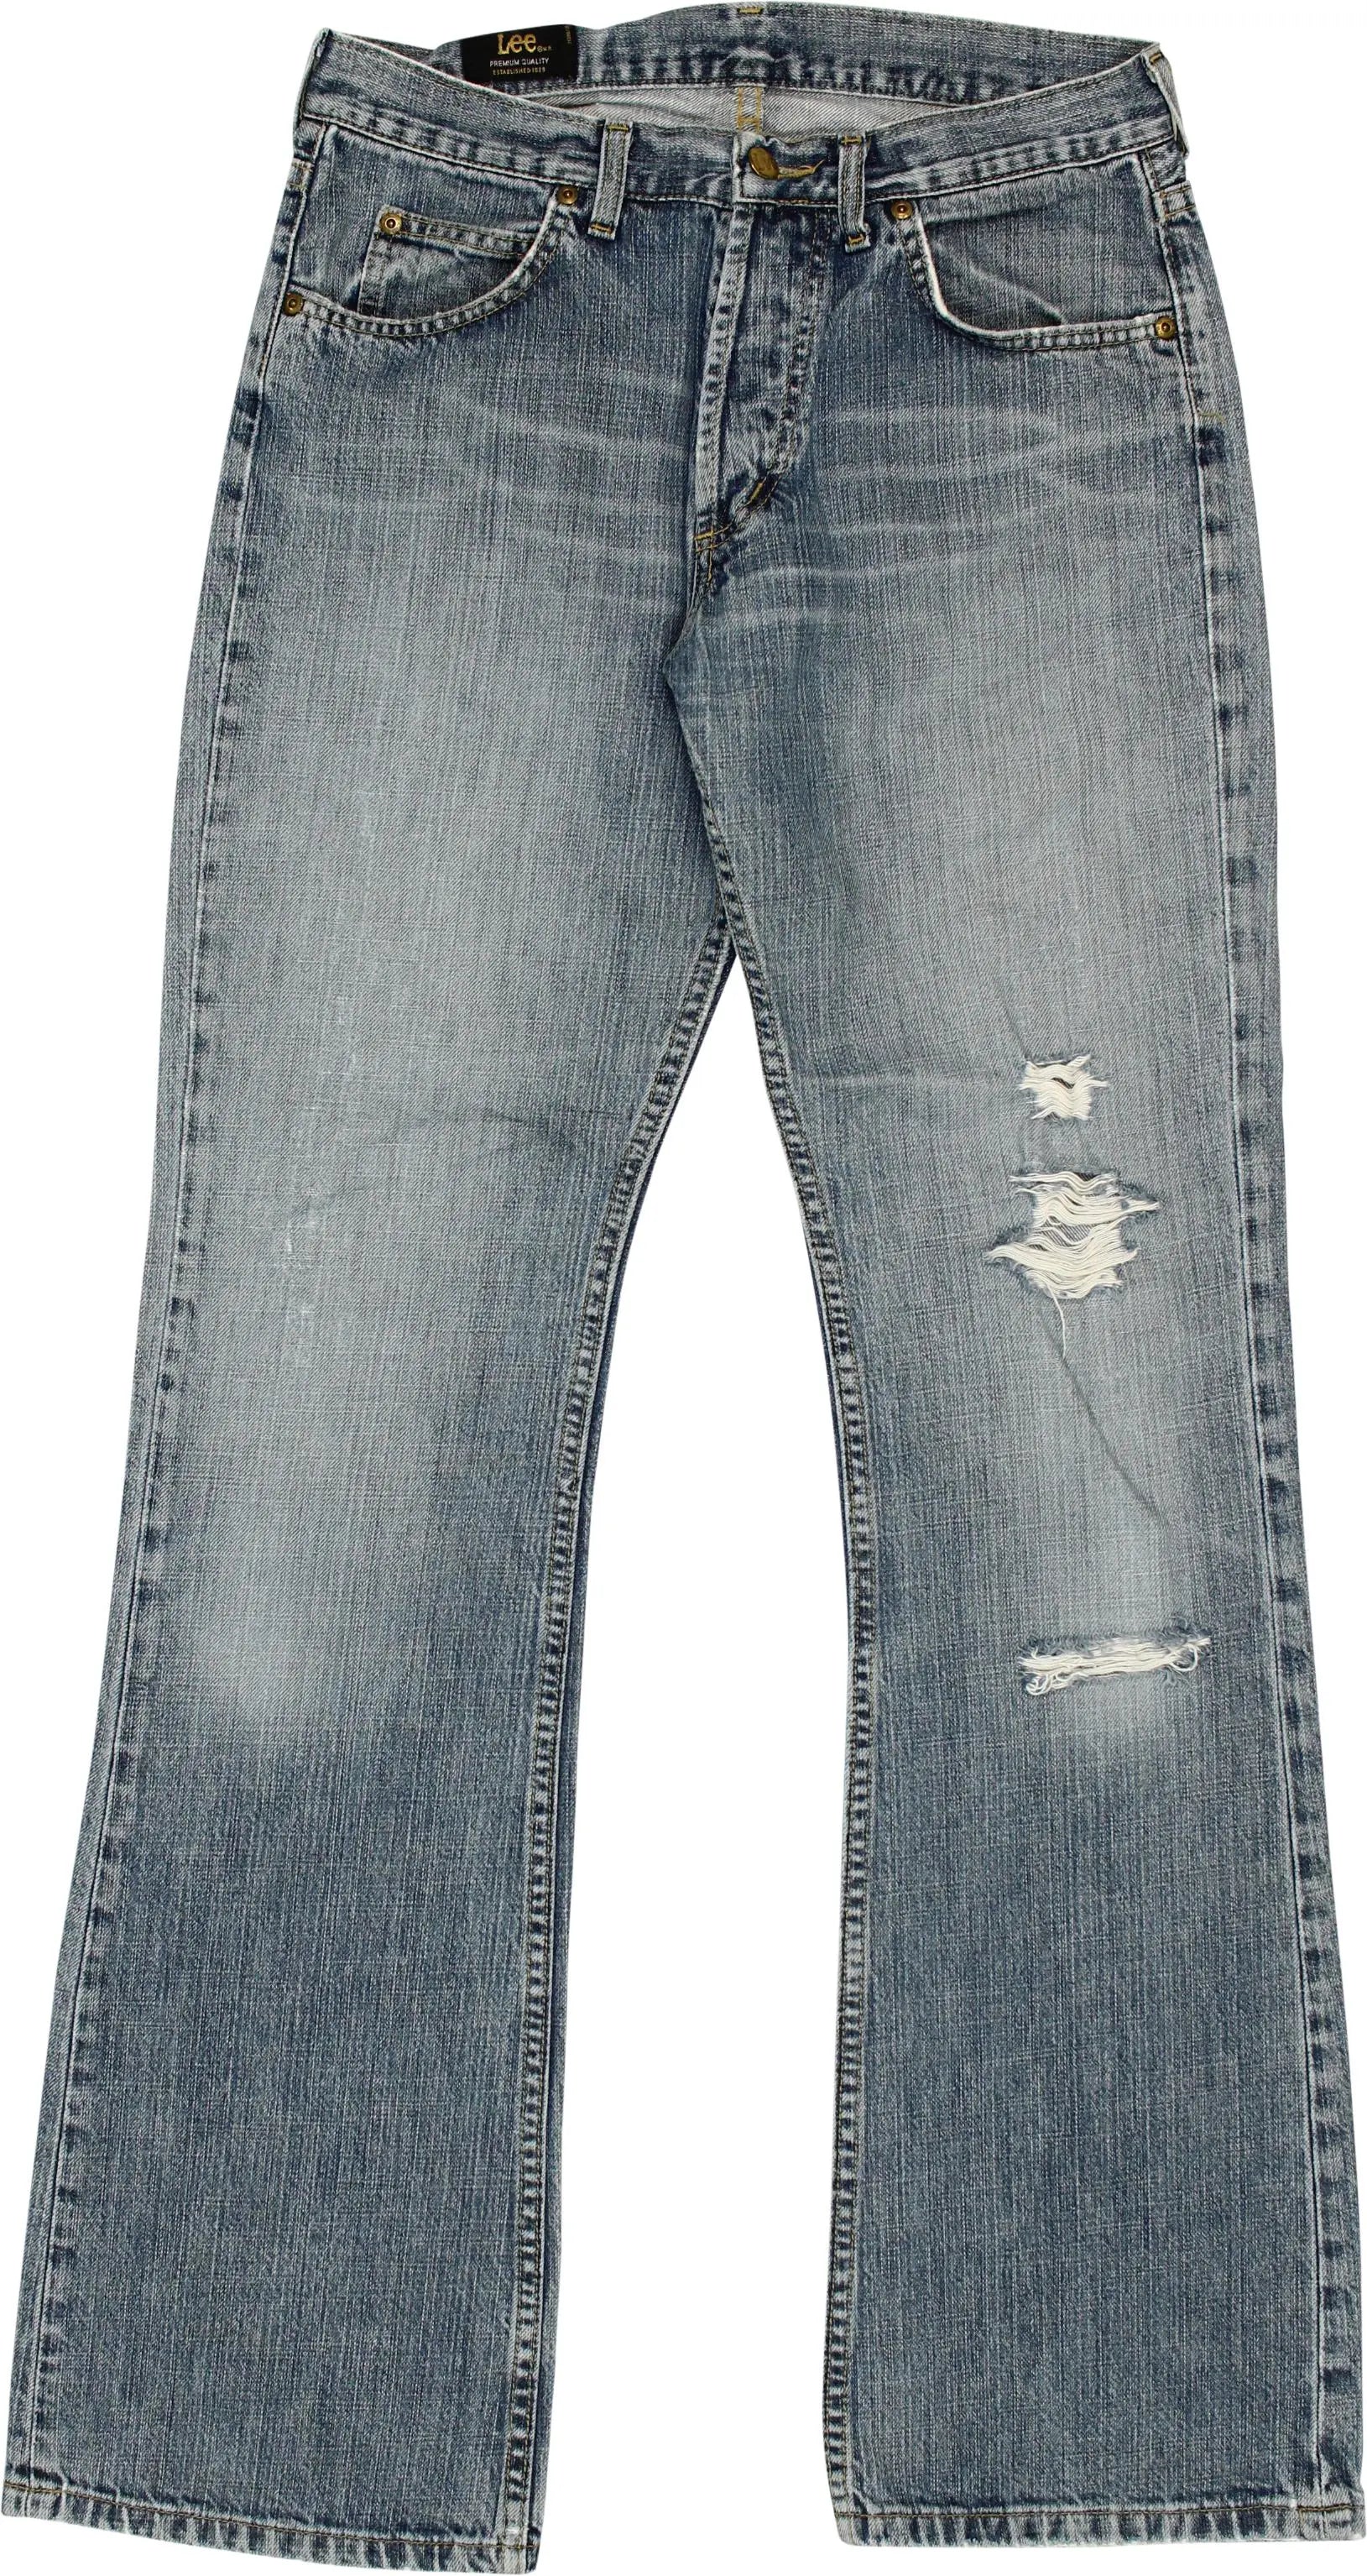 Lee - Lee Denver Bootcut Jeans- ThriftTale.com - Vintage and second handclothing